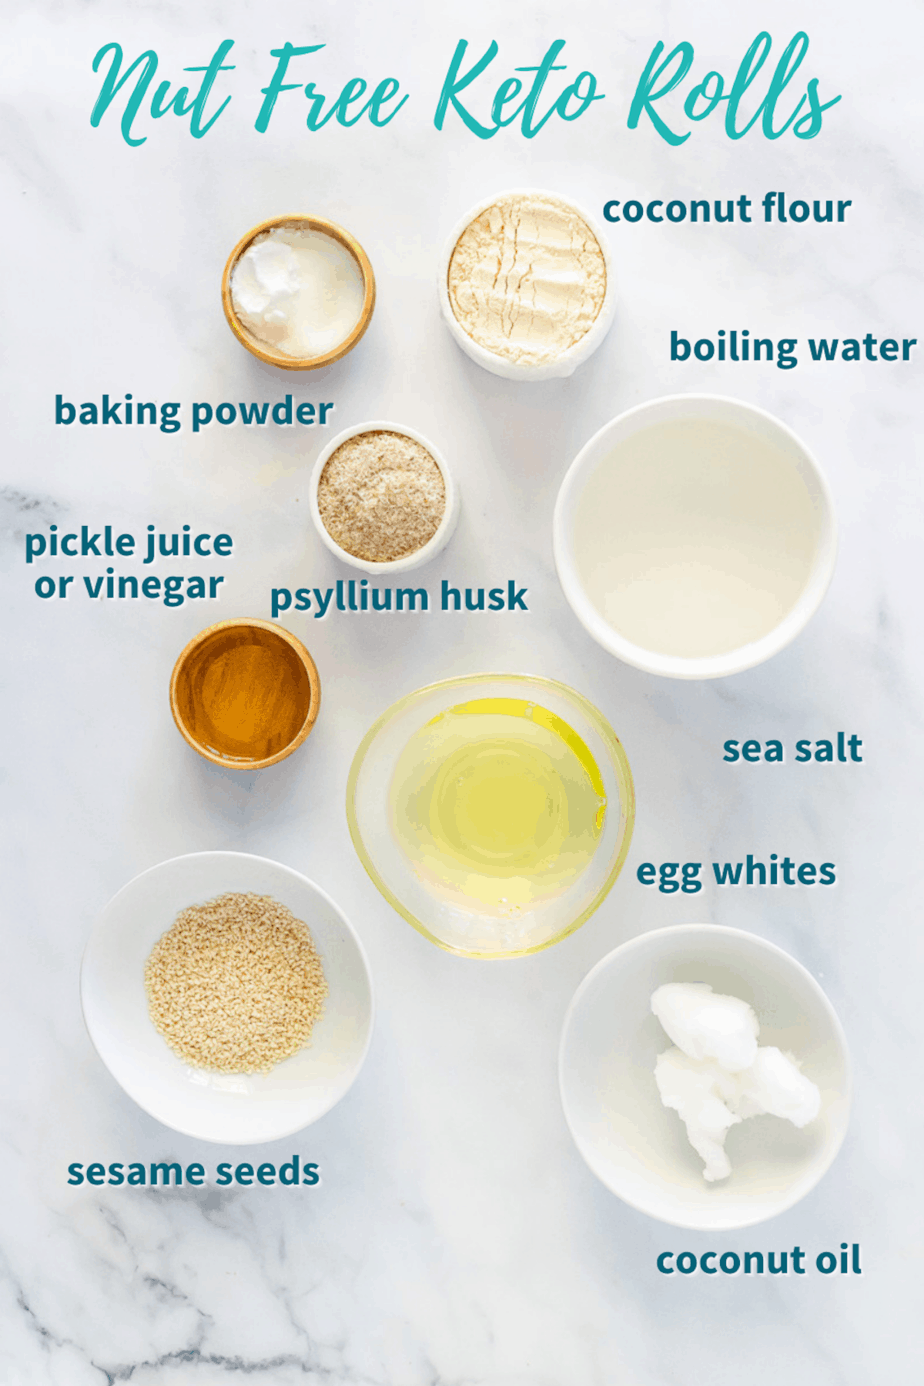 Ingredients for Nut Free Keto Rolls- coconut flour, boiling water, baking powder, pickle juice or vinegar, psyllium husk, sea salt, egg whites, sesame seeds, coconut oil